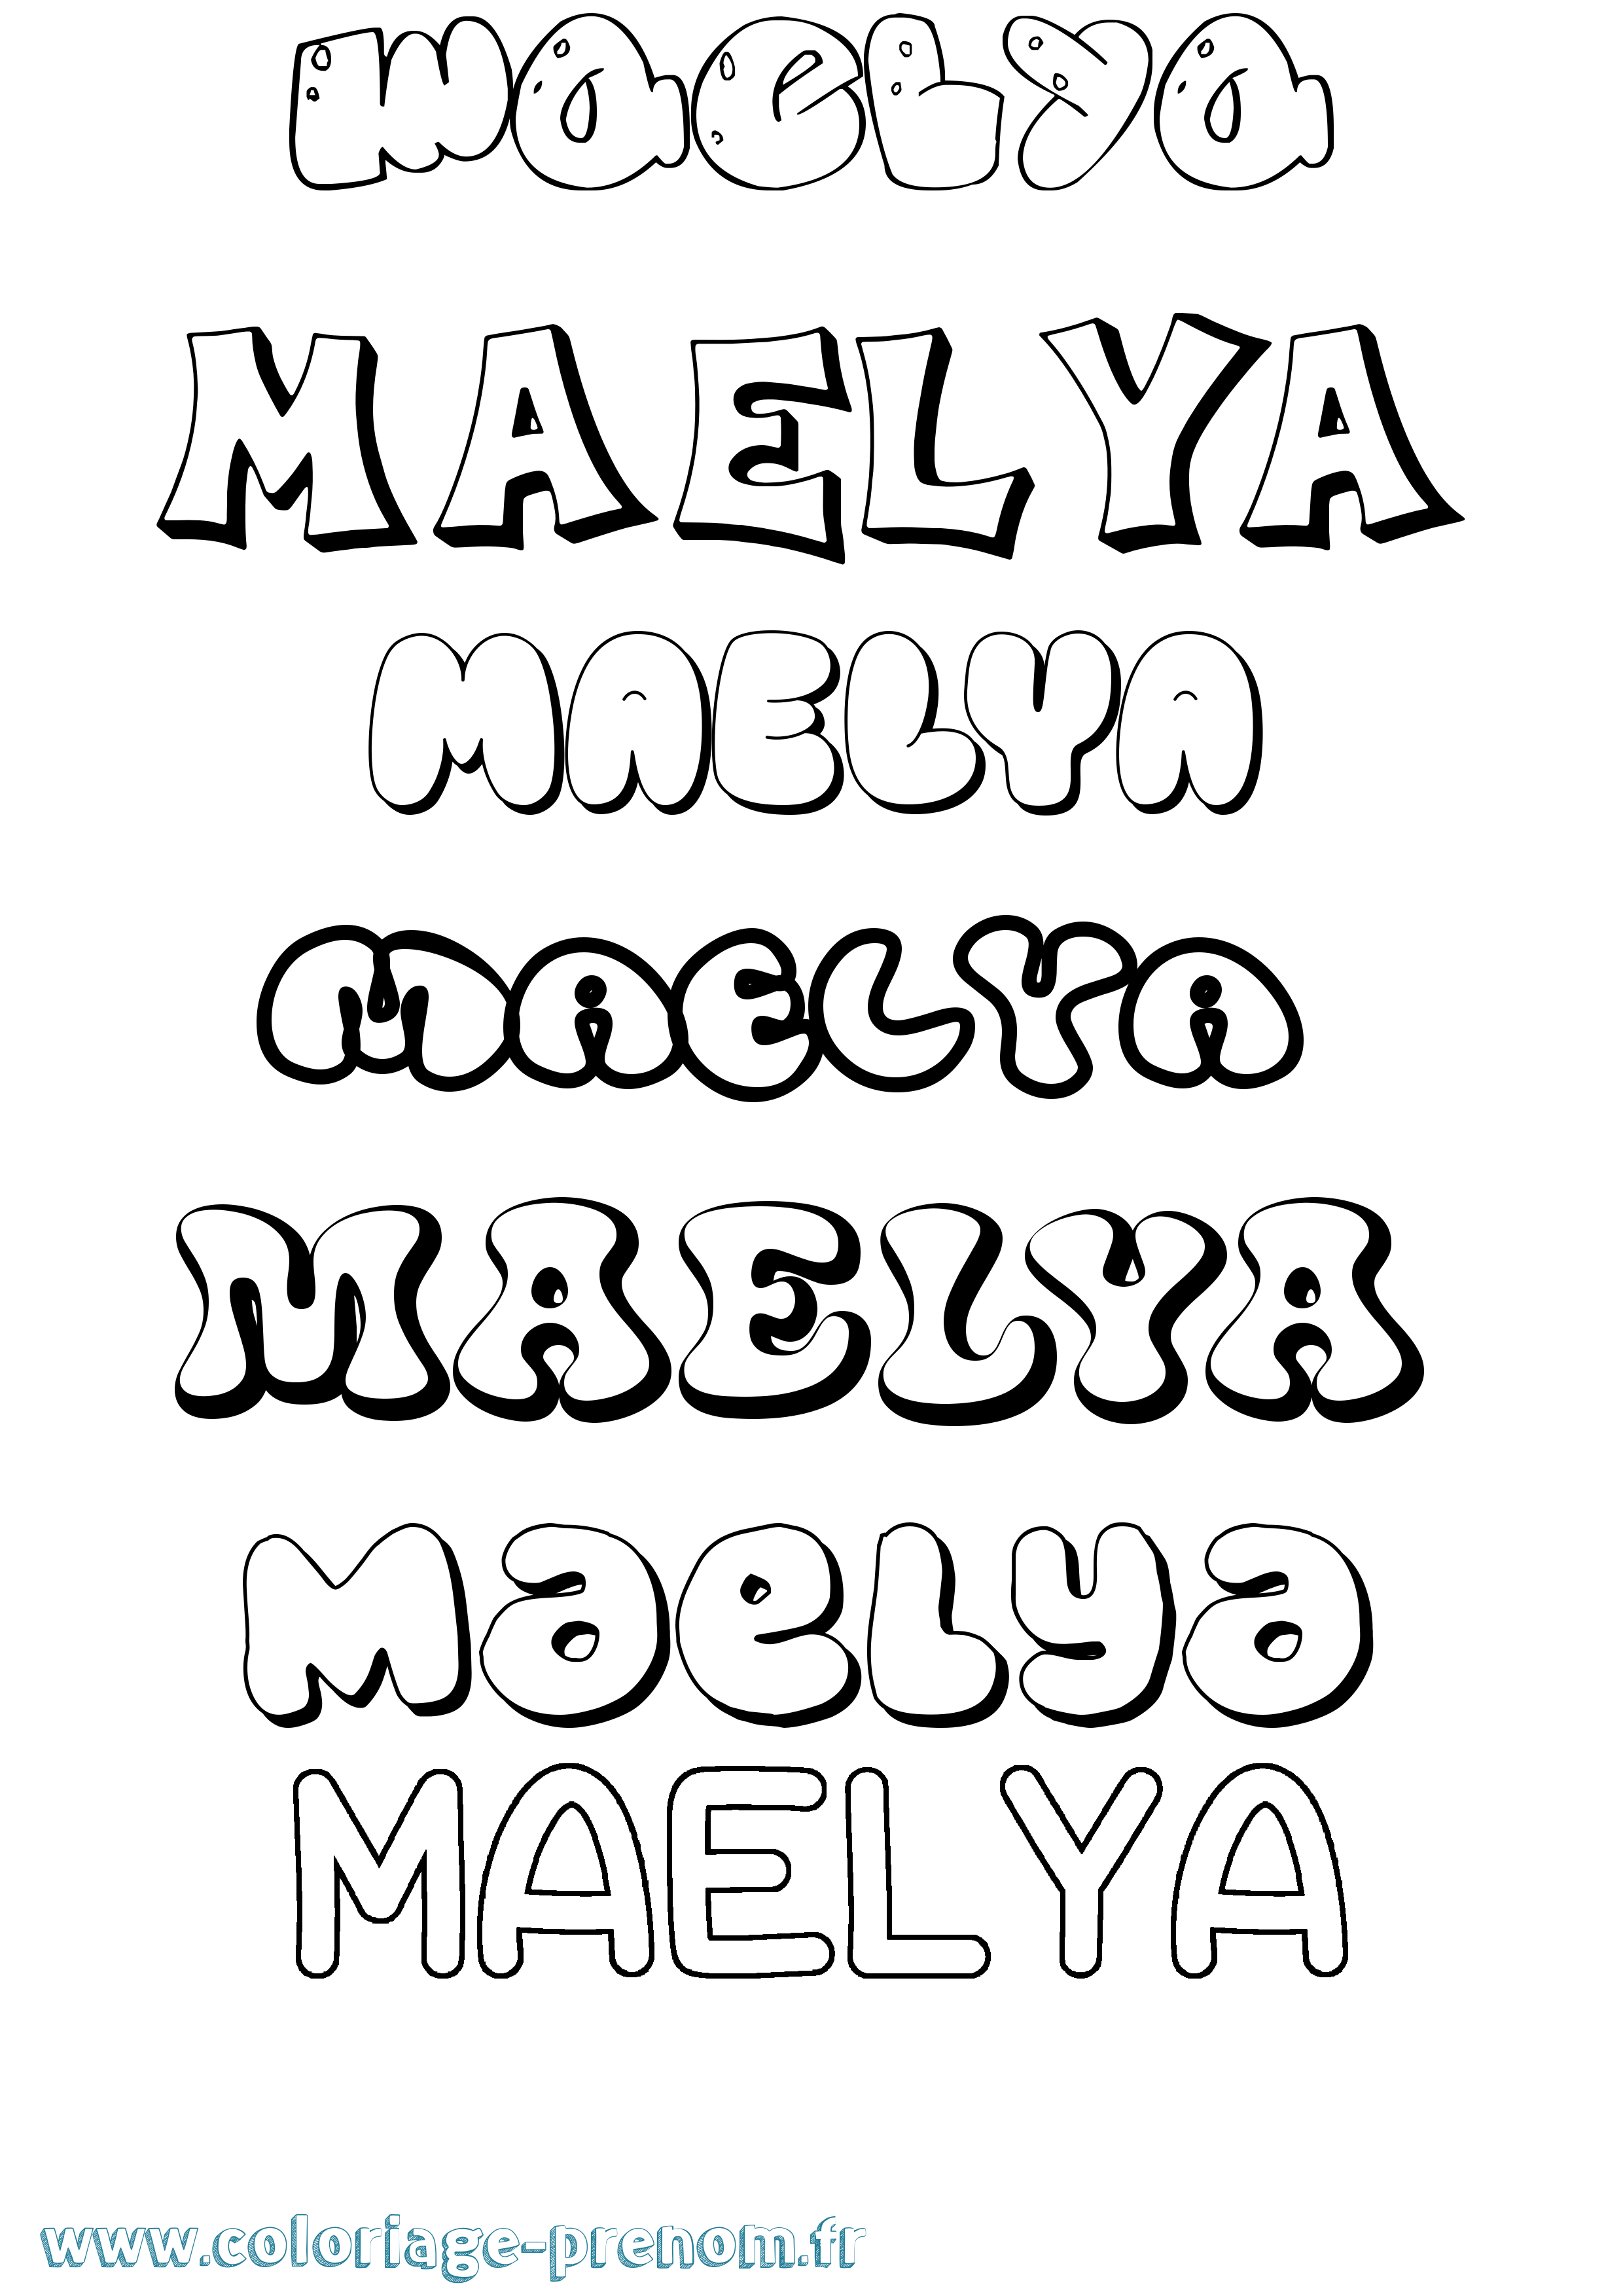 Coloriage prénom Maelya Bubble